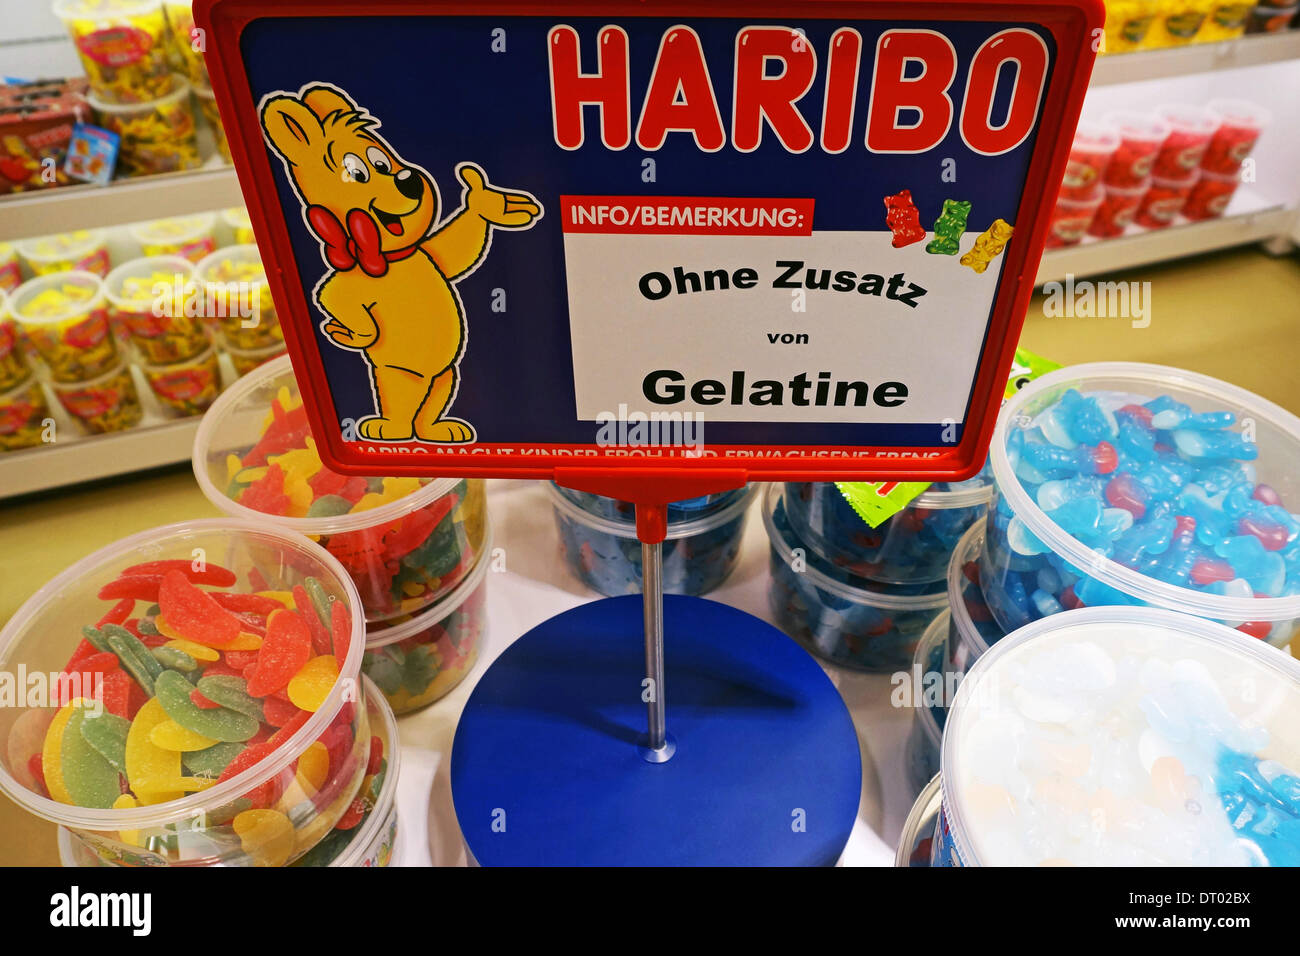 Germany: Haribo store in the center of Bonn Stock Photo